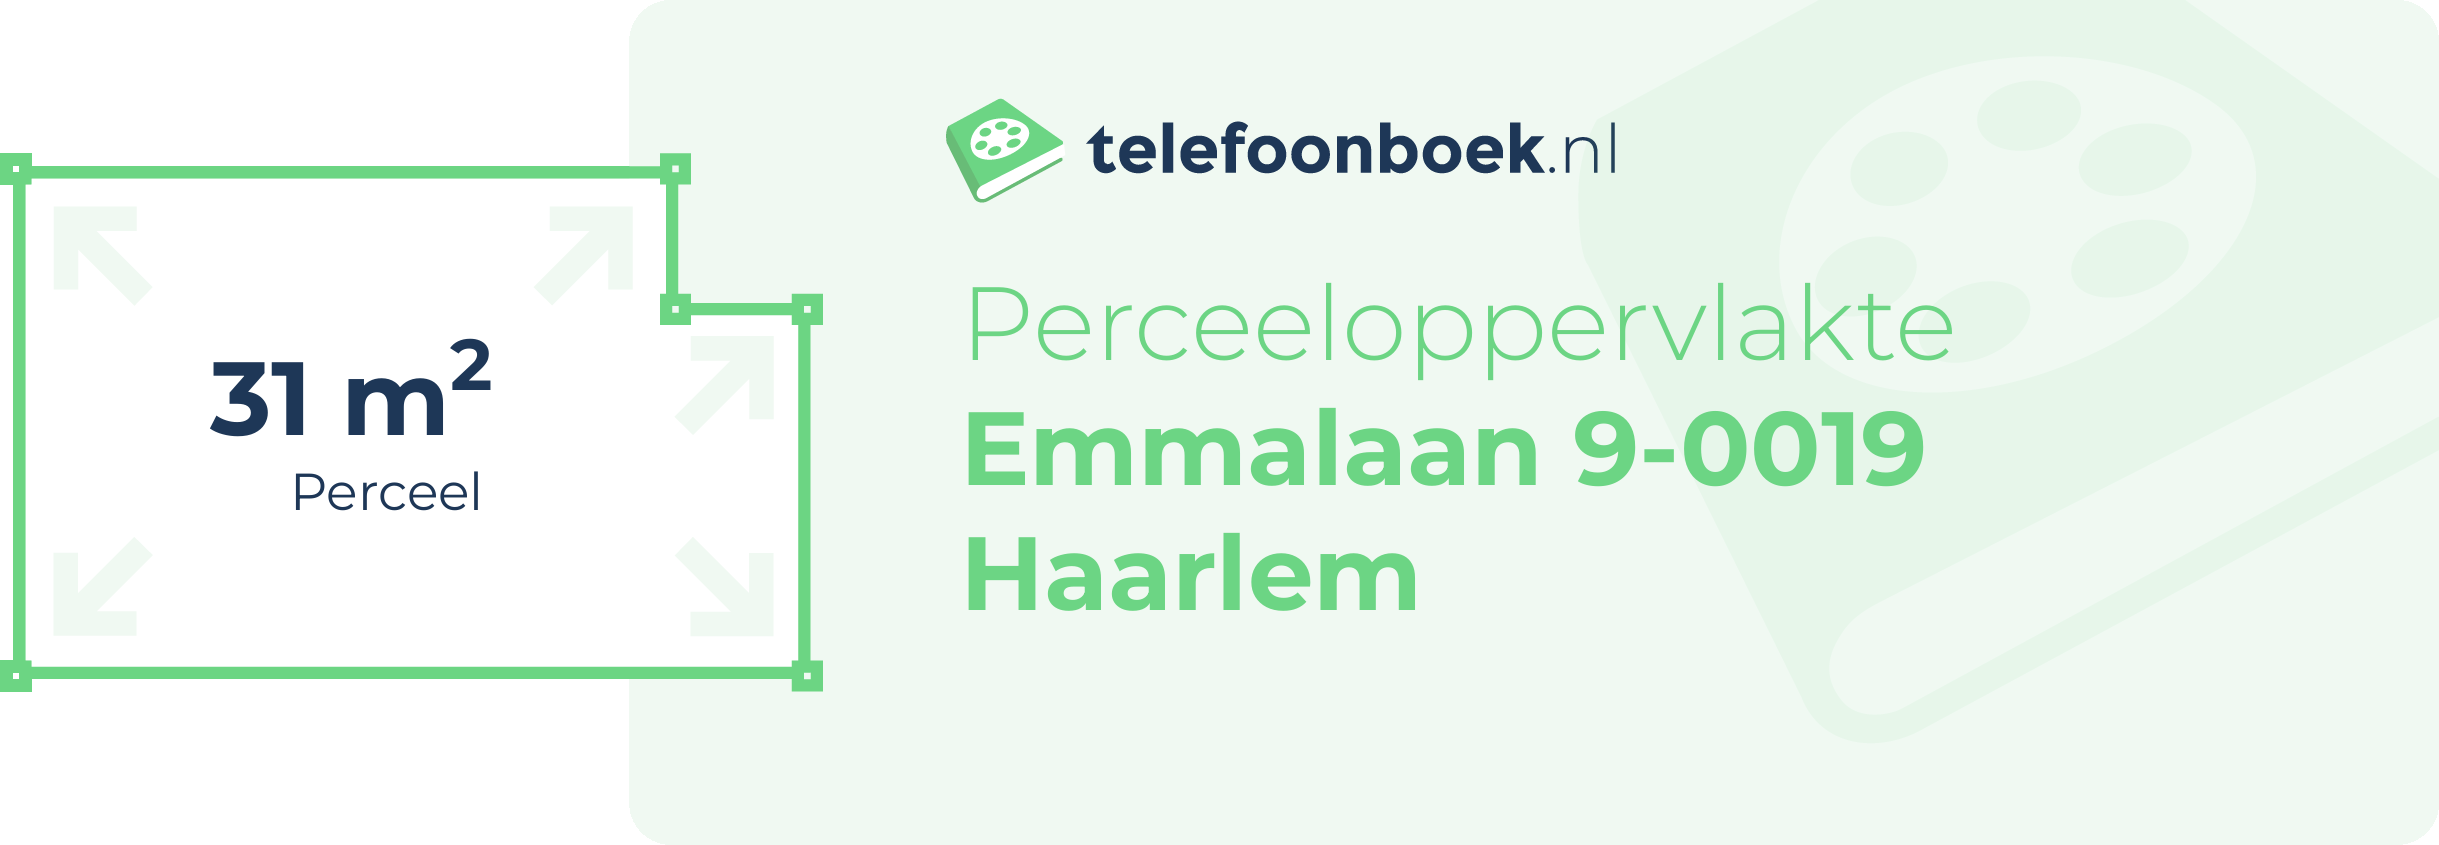 Perceeloppervlakte Emmalaan 9-0019 Haarlem